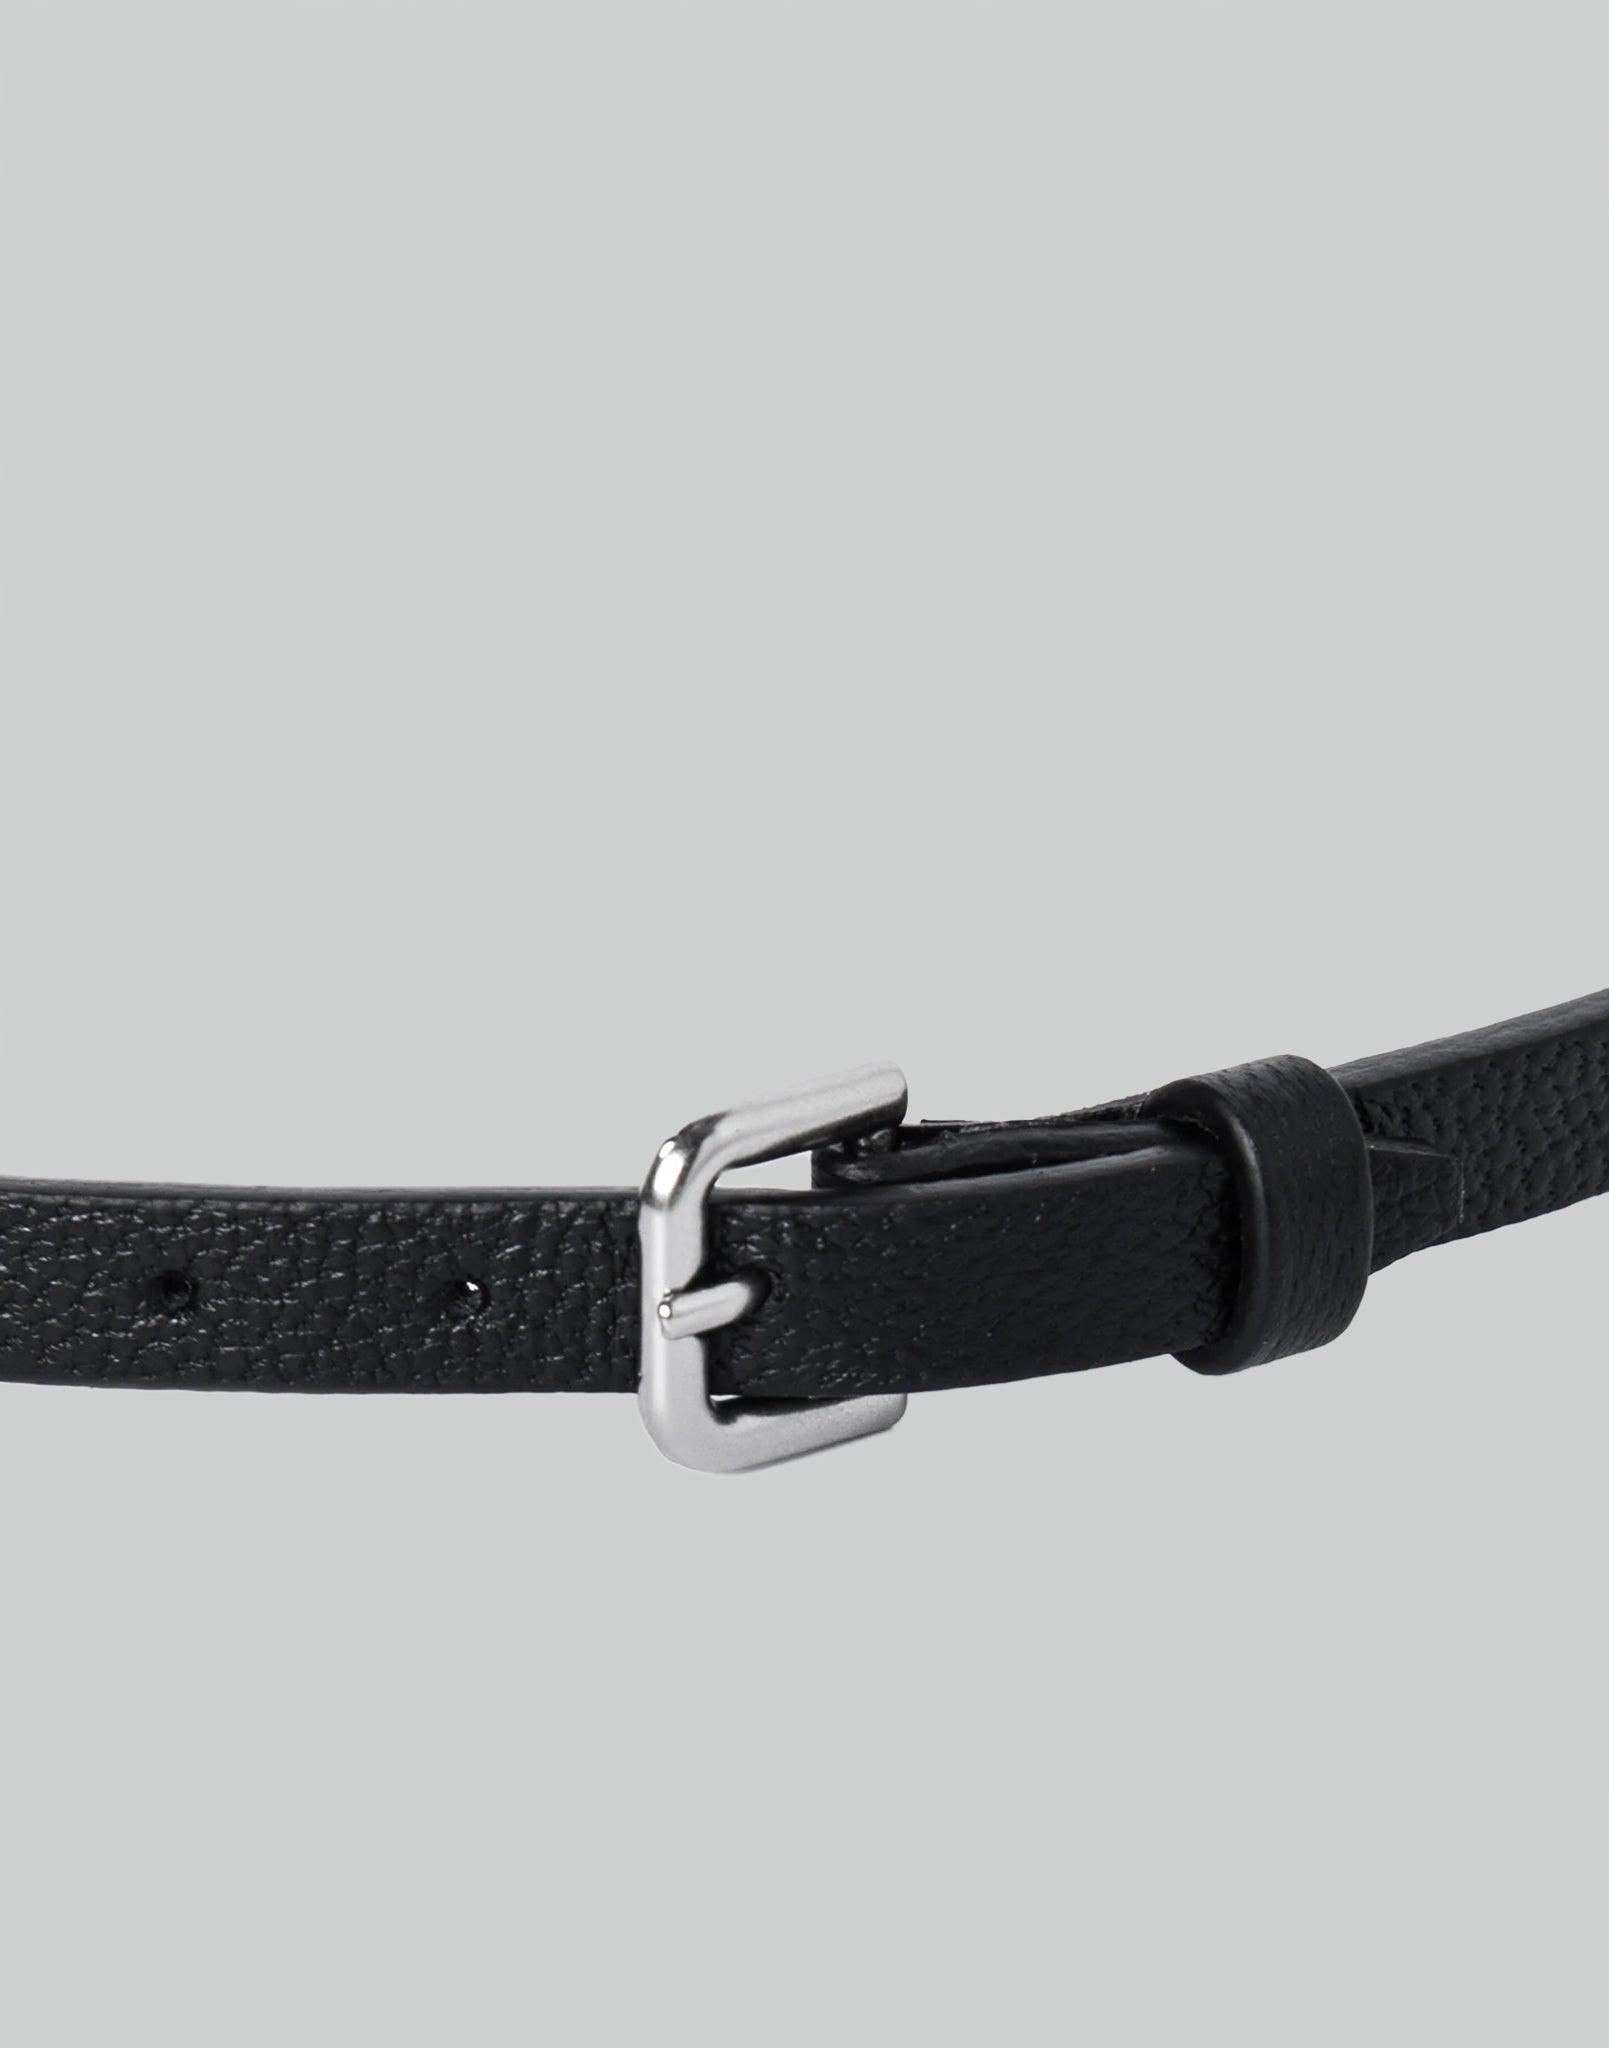 Juun.J Brass Leather Bracelet - 082plus